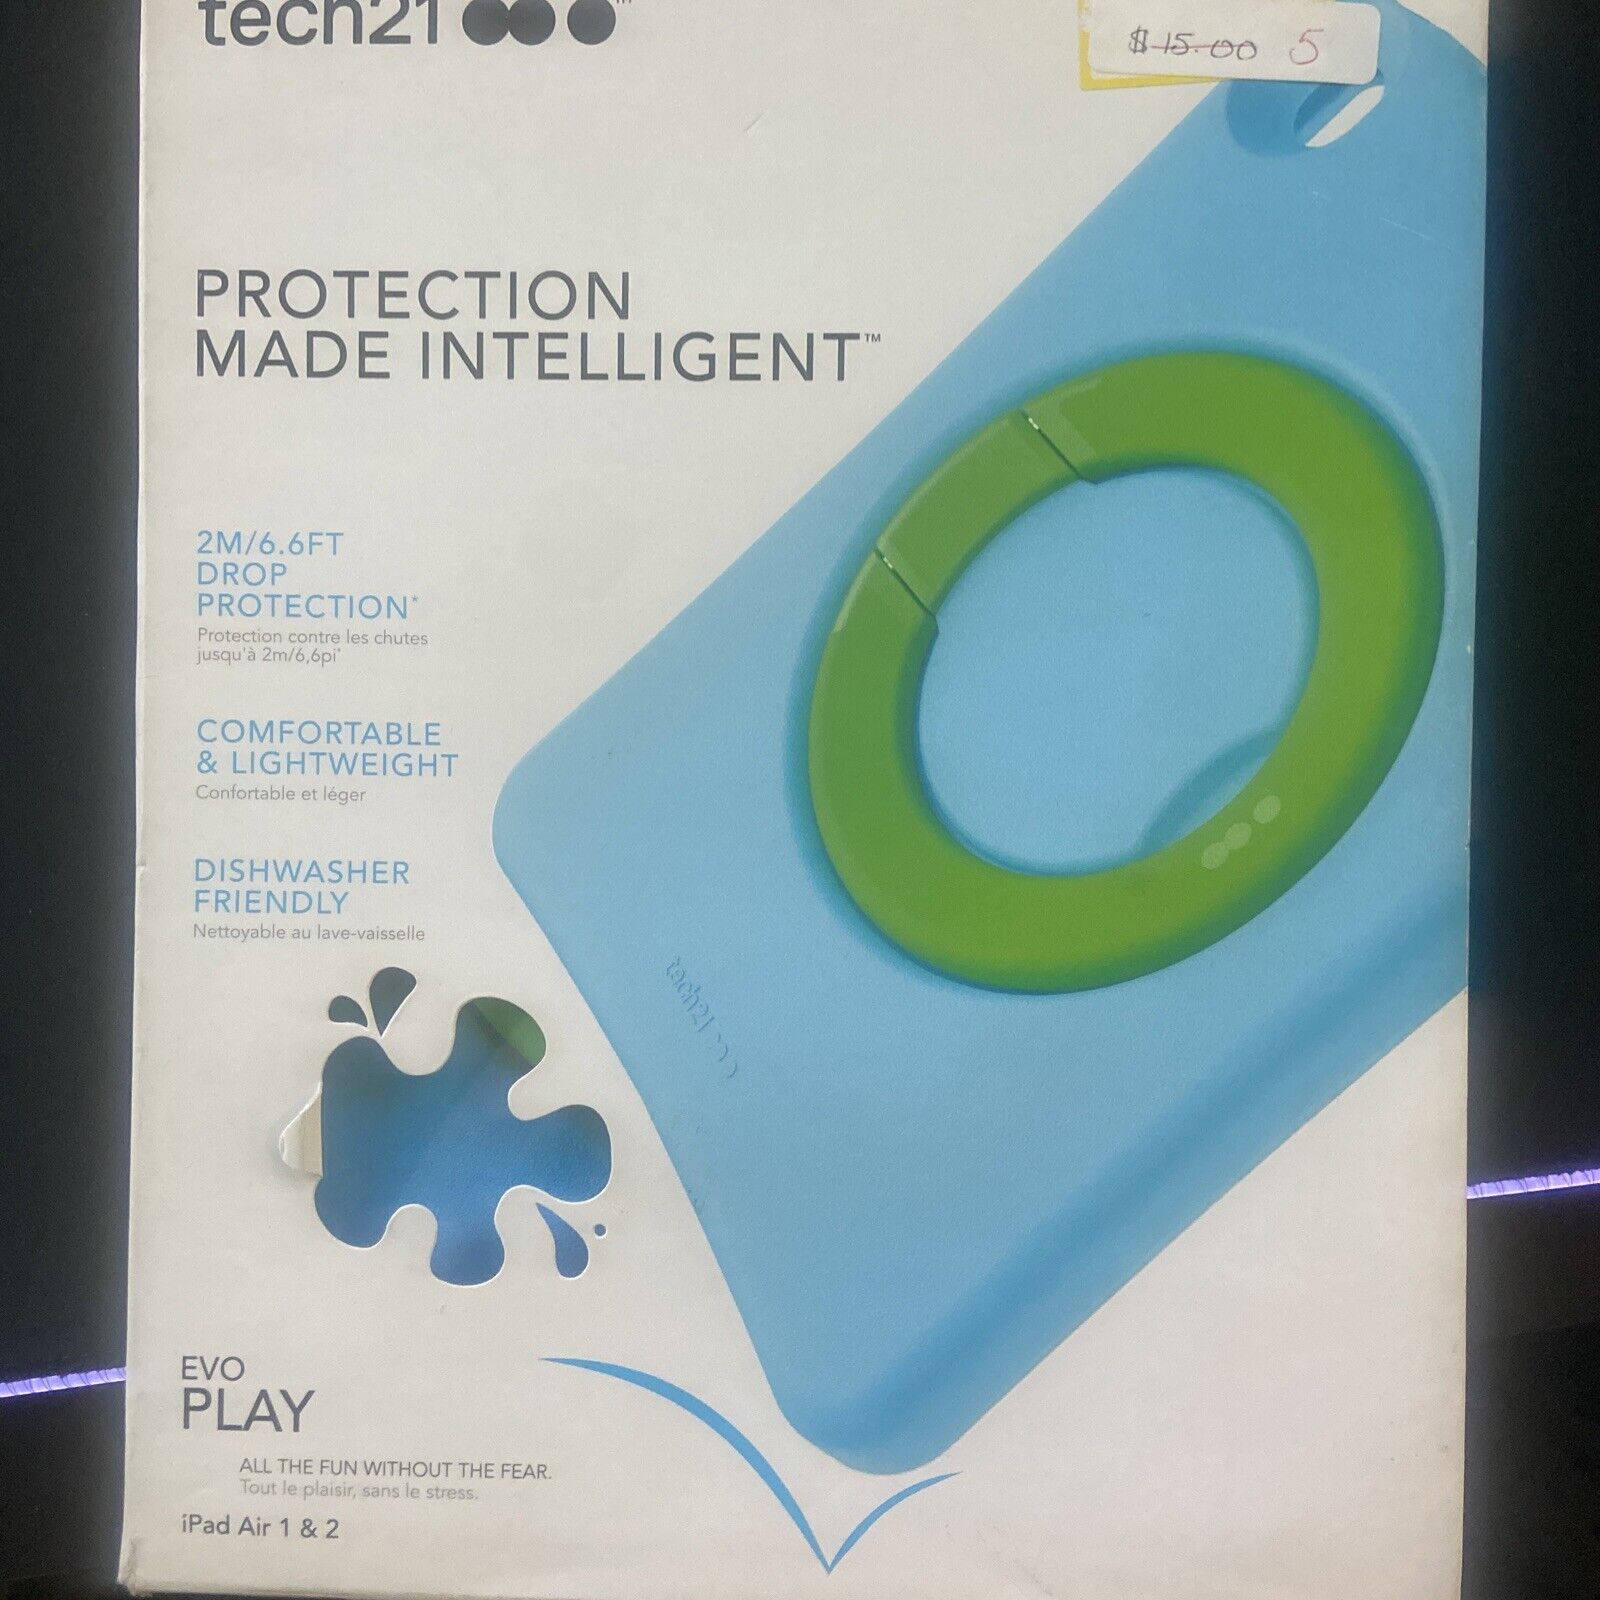 TECH21 Evo Play Drop Protection iPad Air 1 & 2